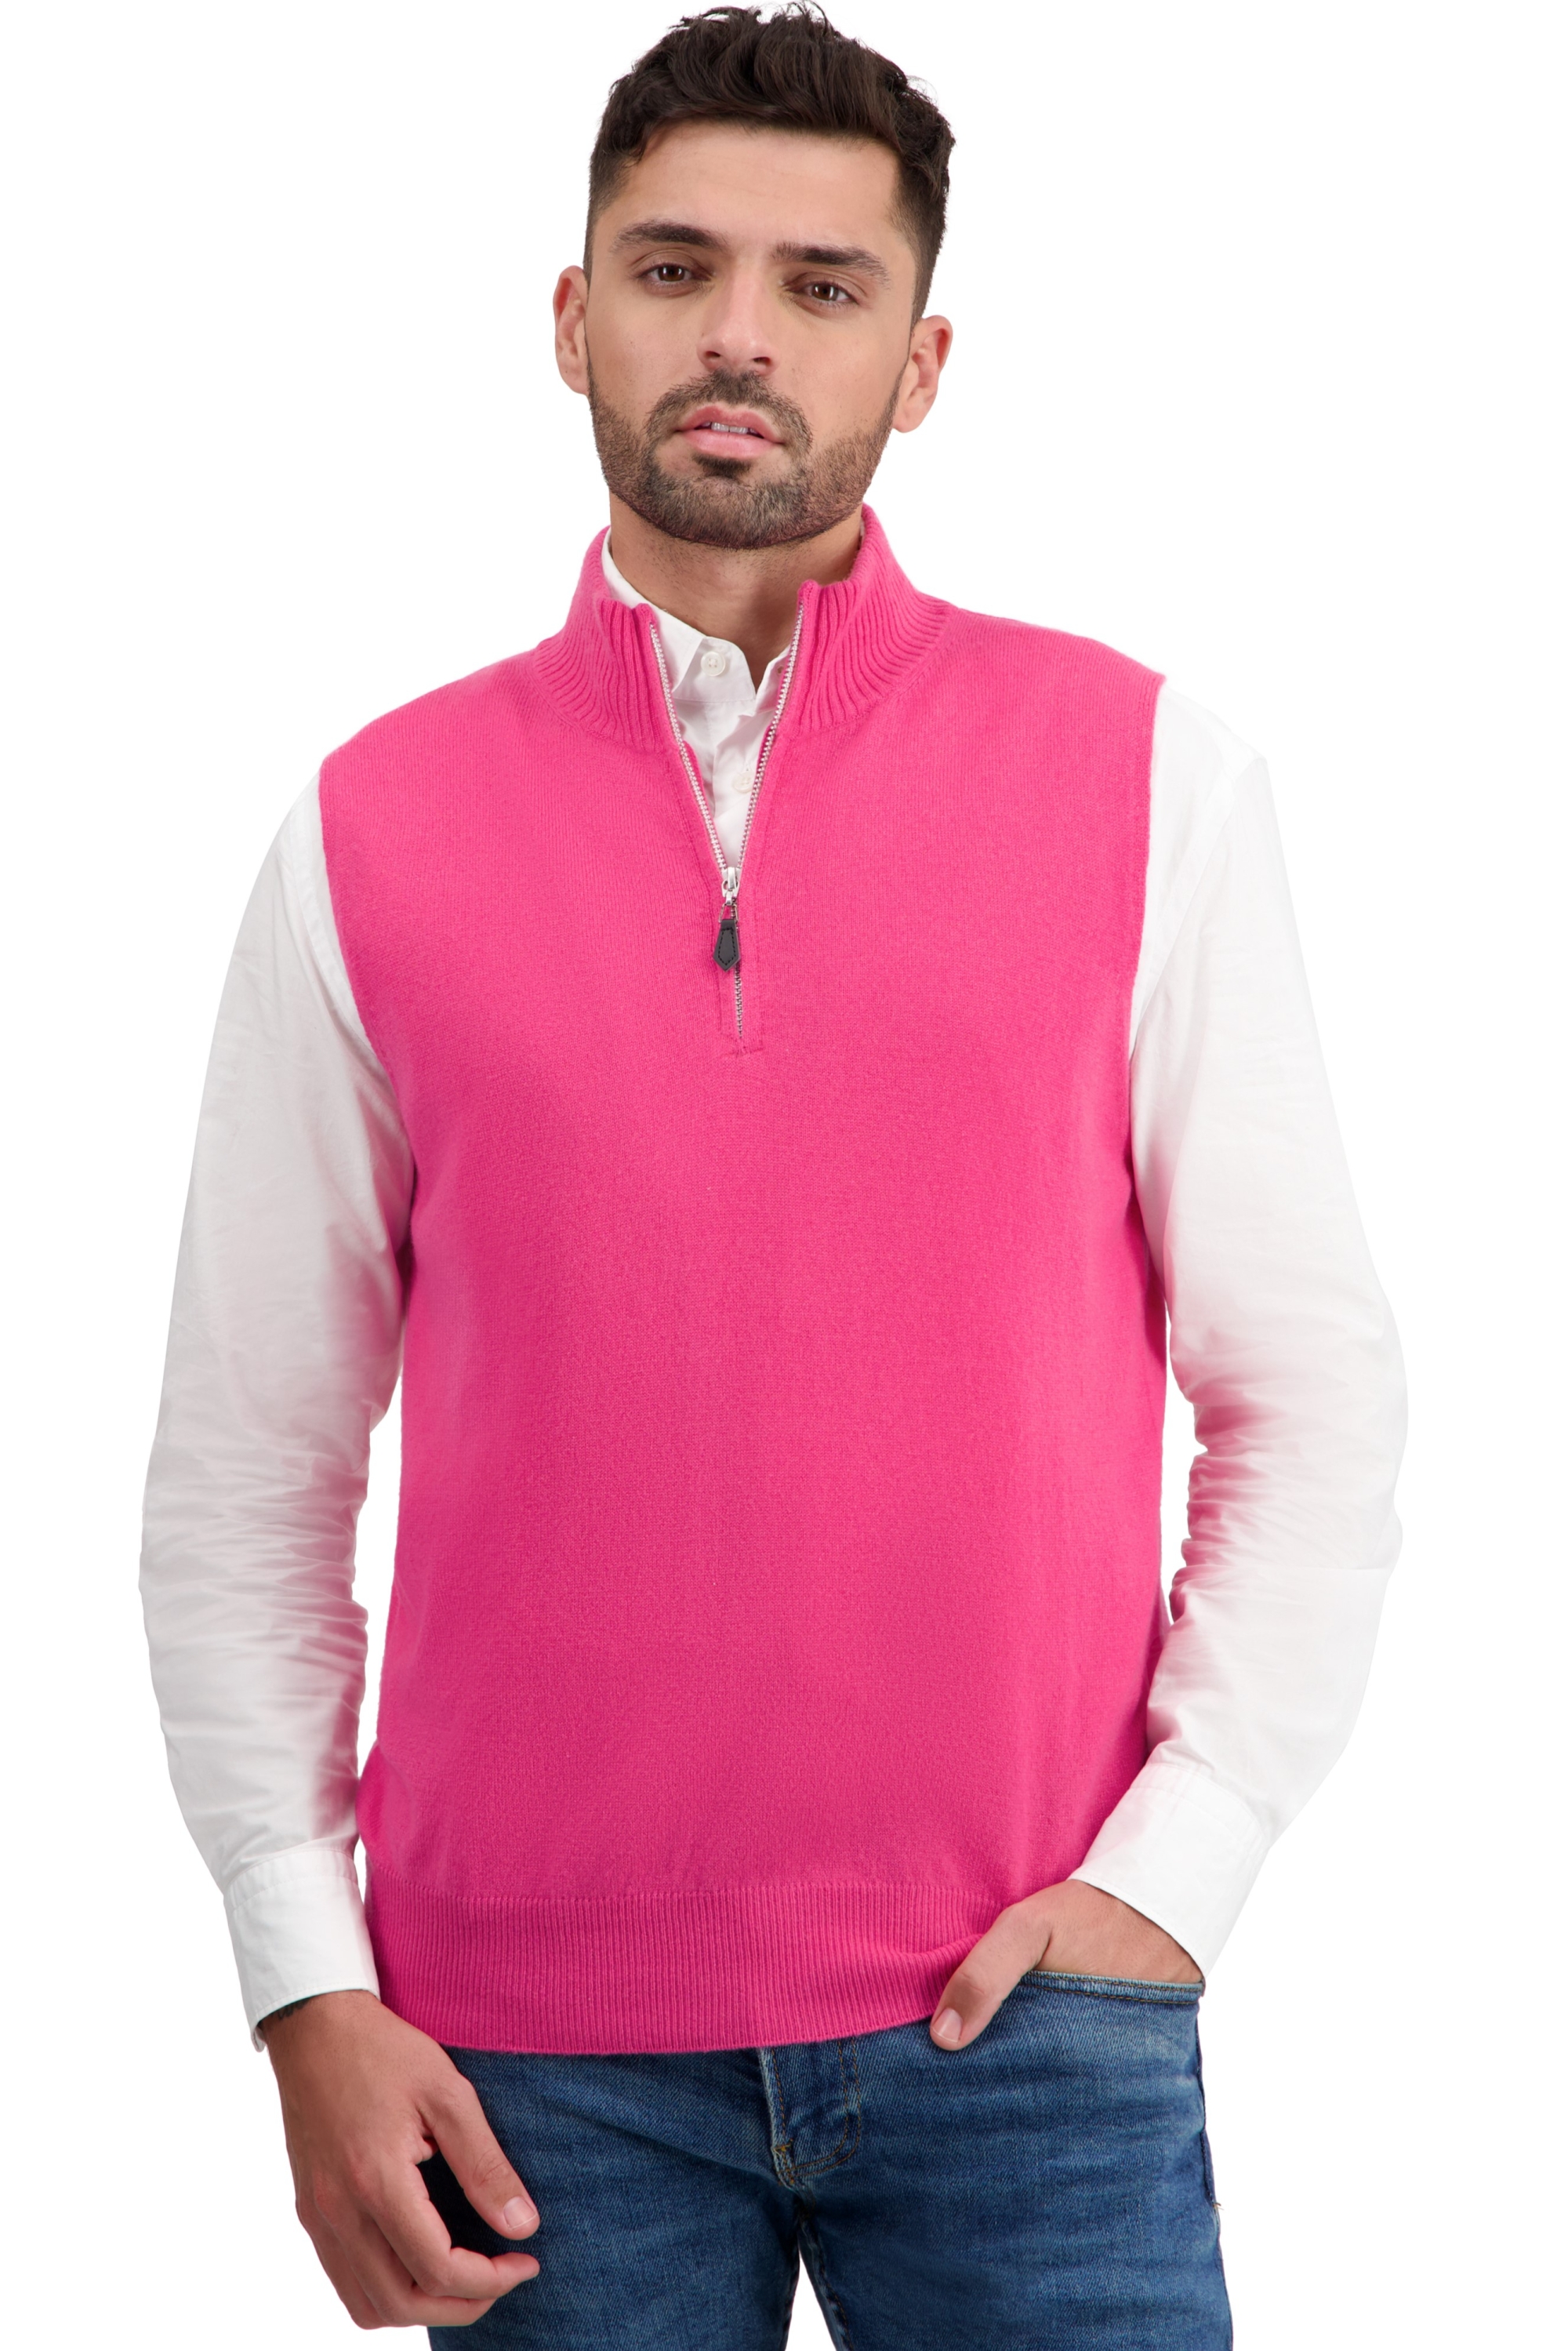 Cashmere men waistcoat sleeveless sweaters texas shocking pink 3xl